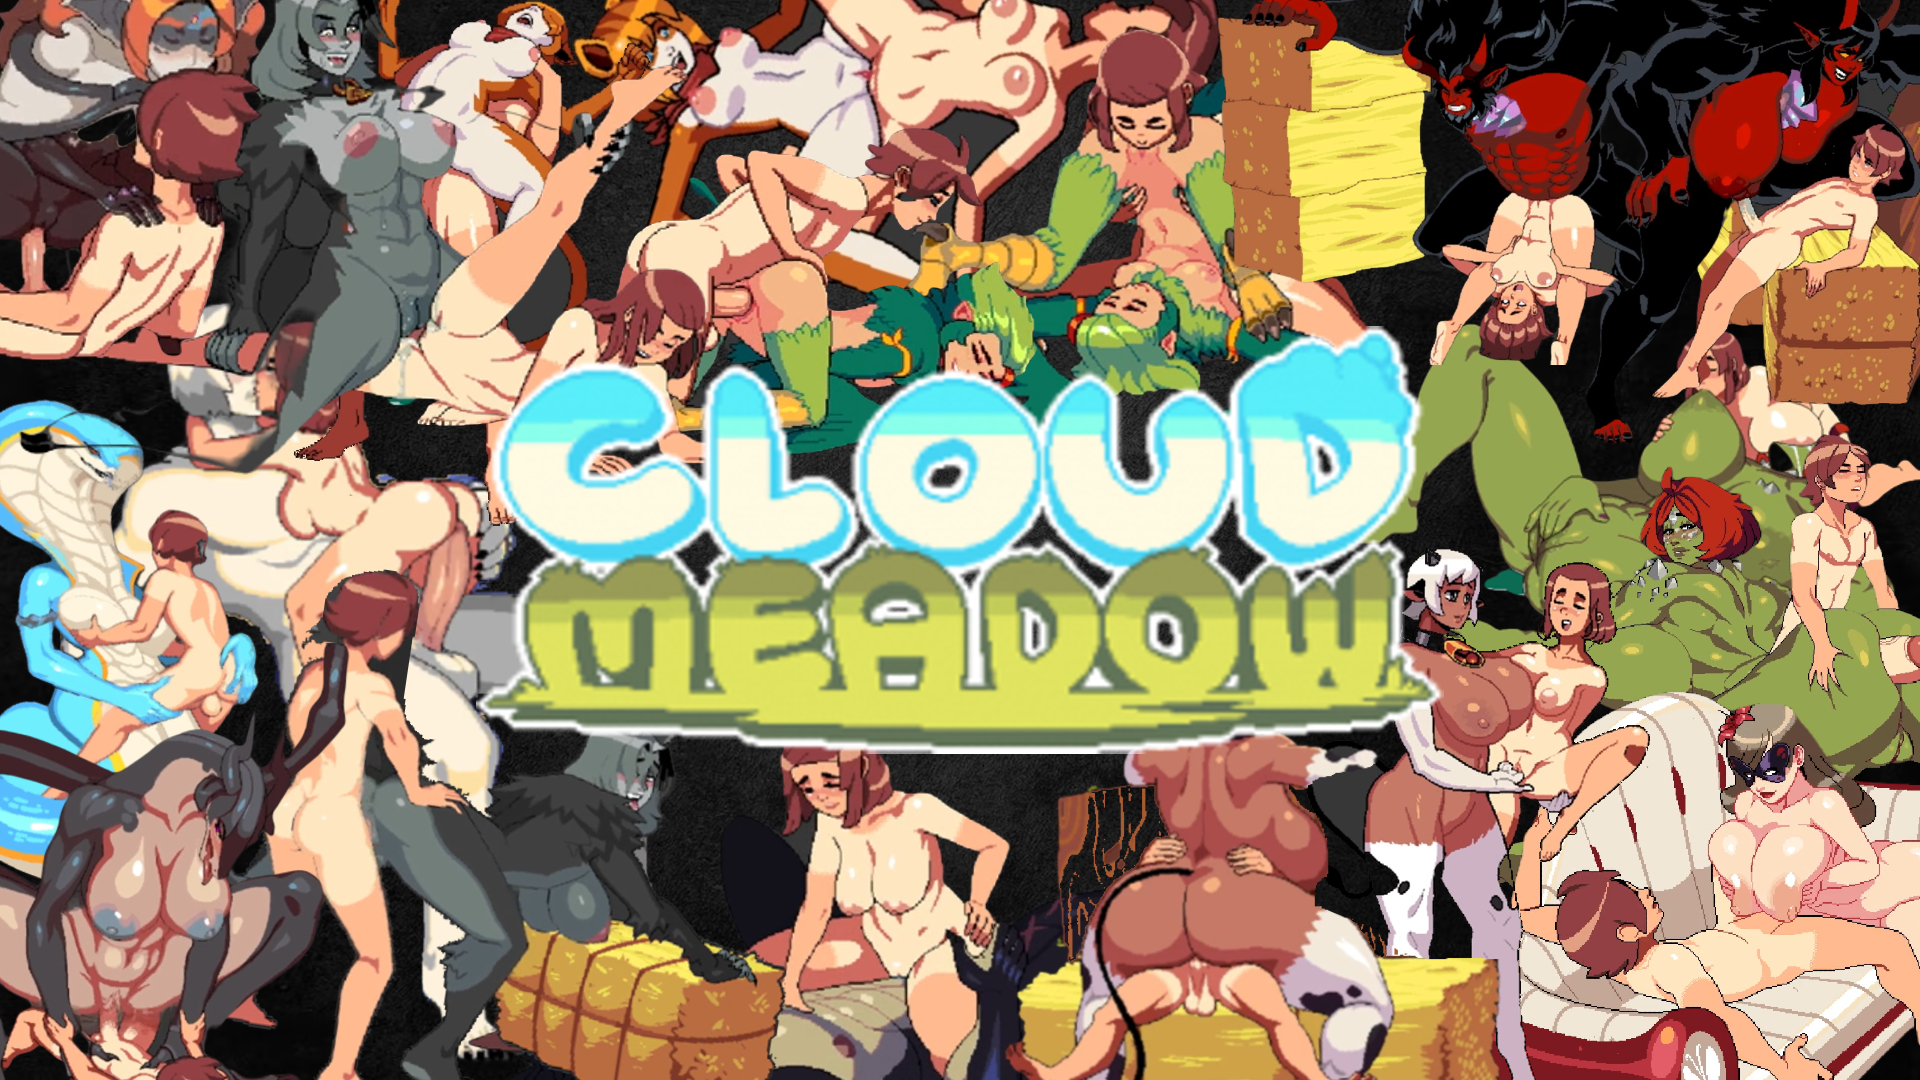 Cloud kedow sex scenes